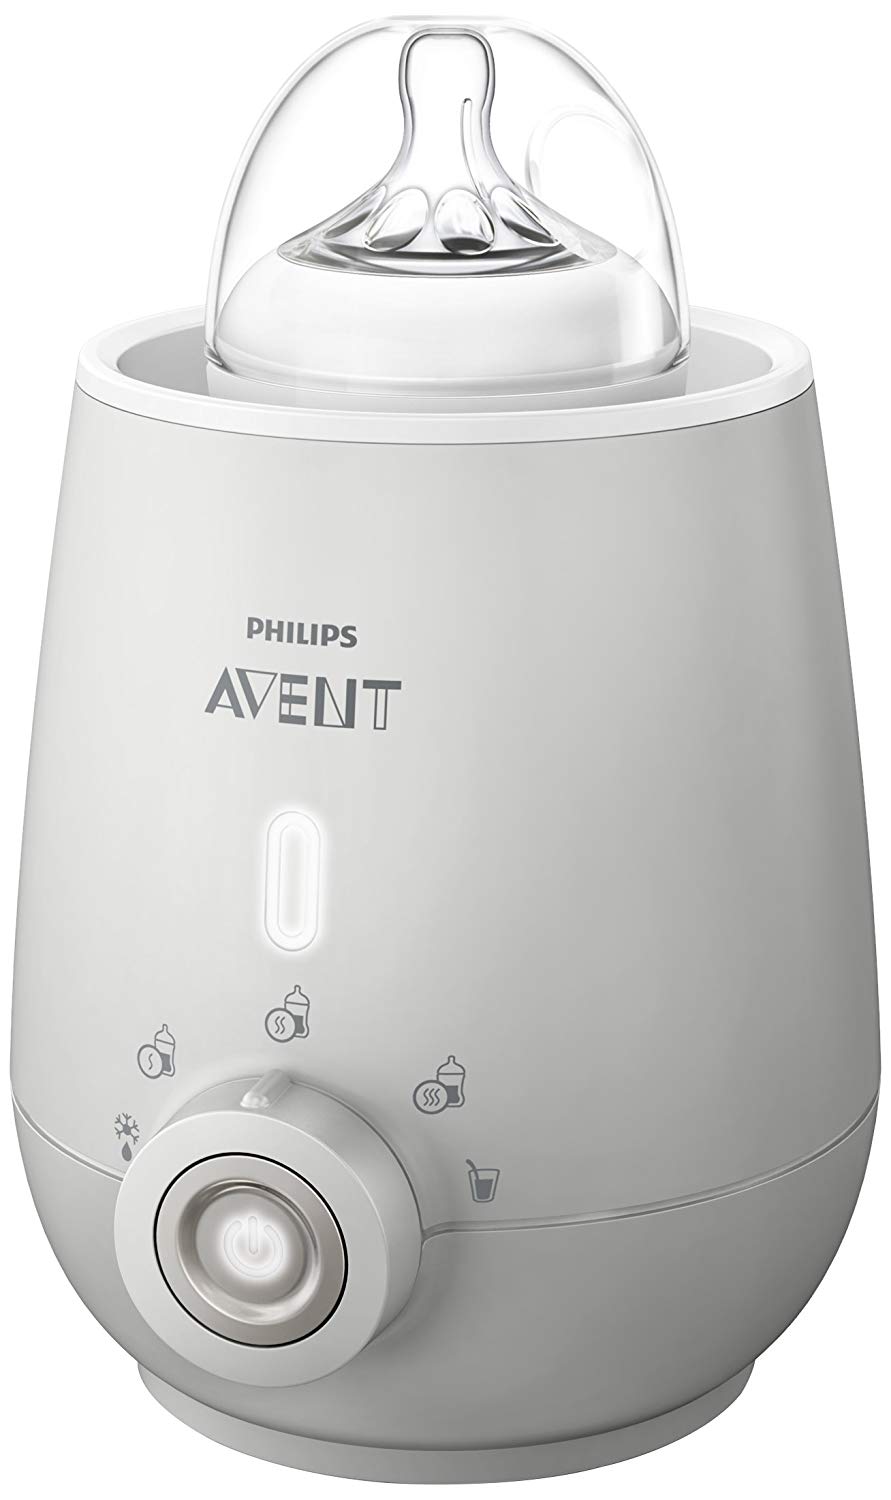 Philips AVENT Electric milk warmer.